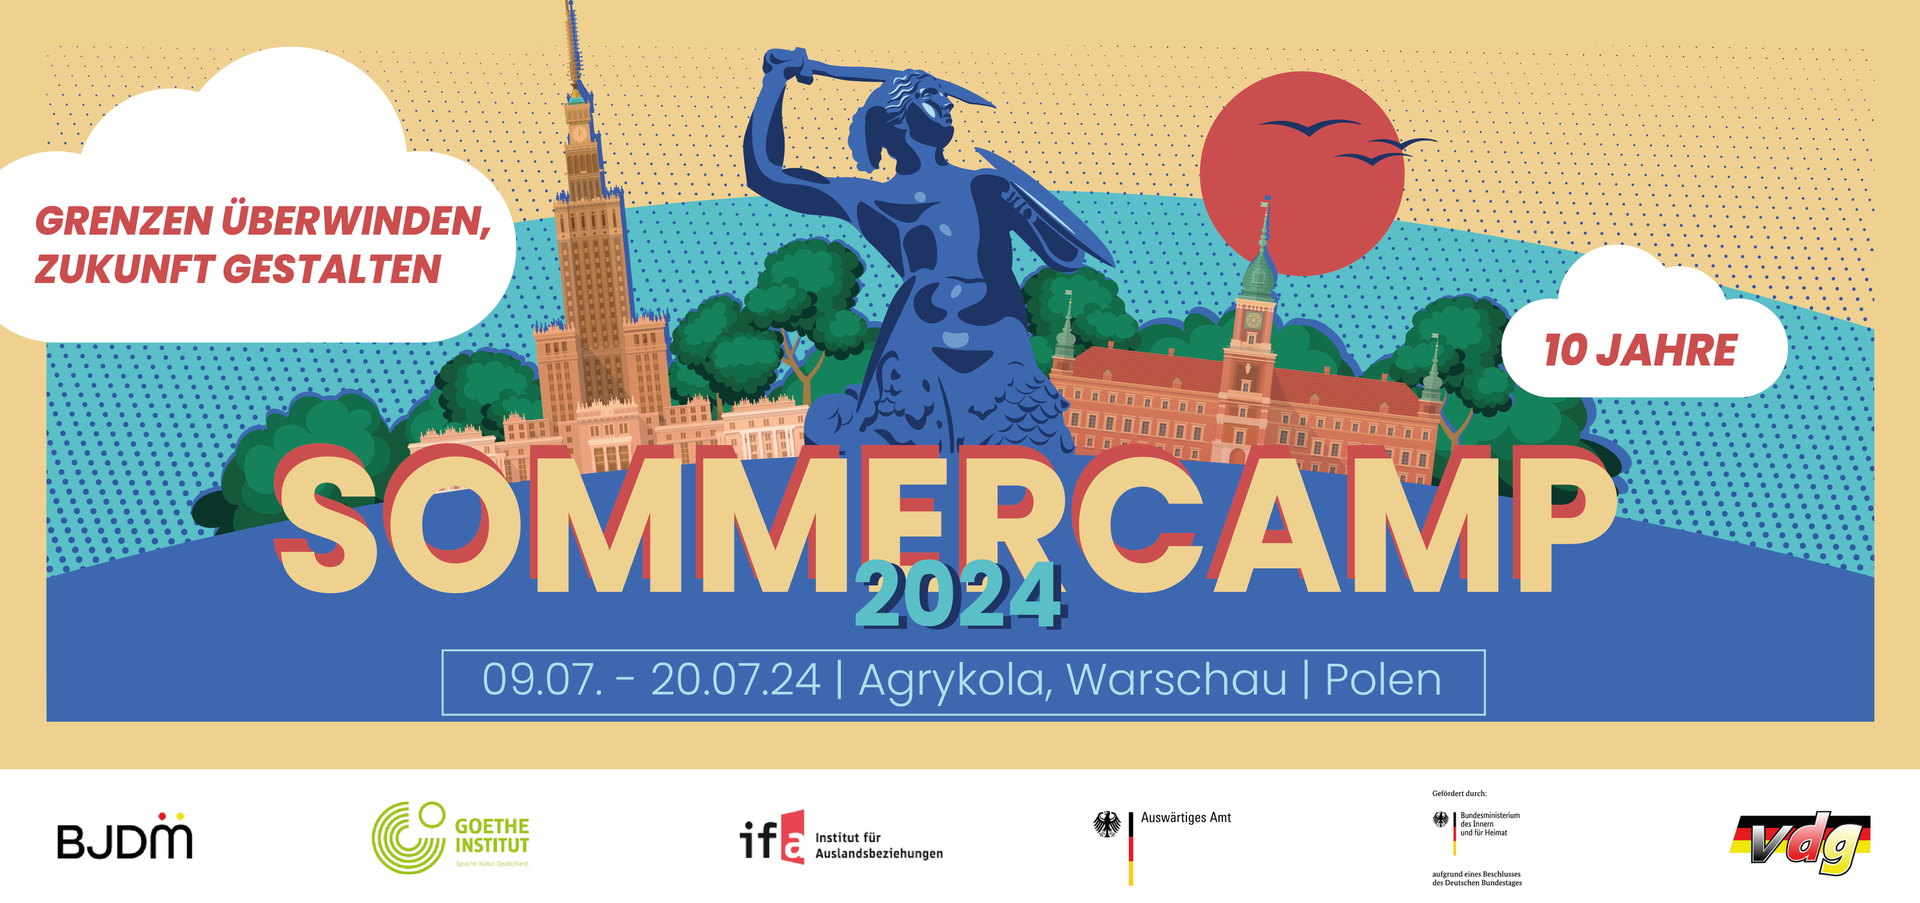 Internationales Sommercamp in Polen